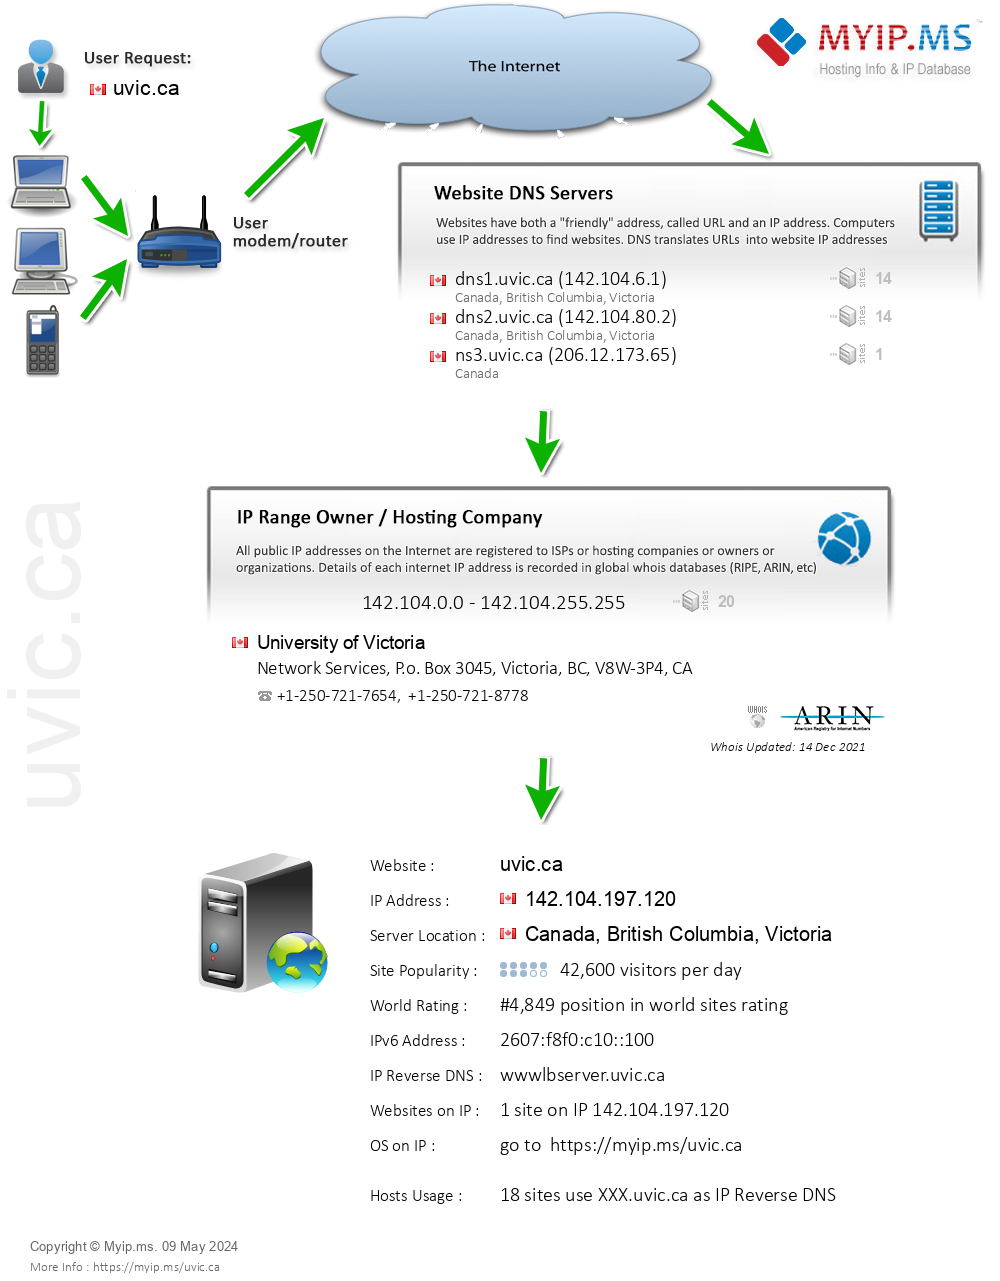 Uvic.ca - Website Hosting Visual IP Diagram